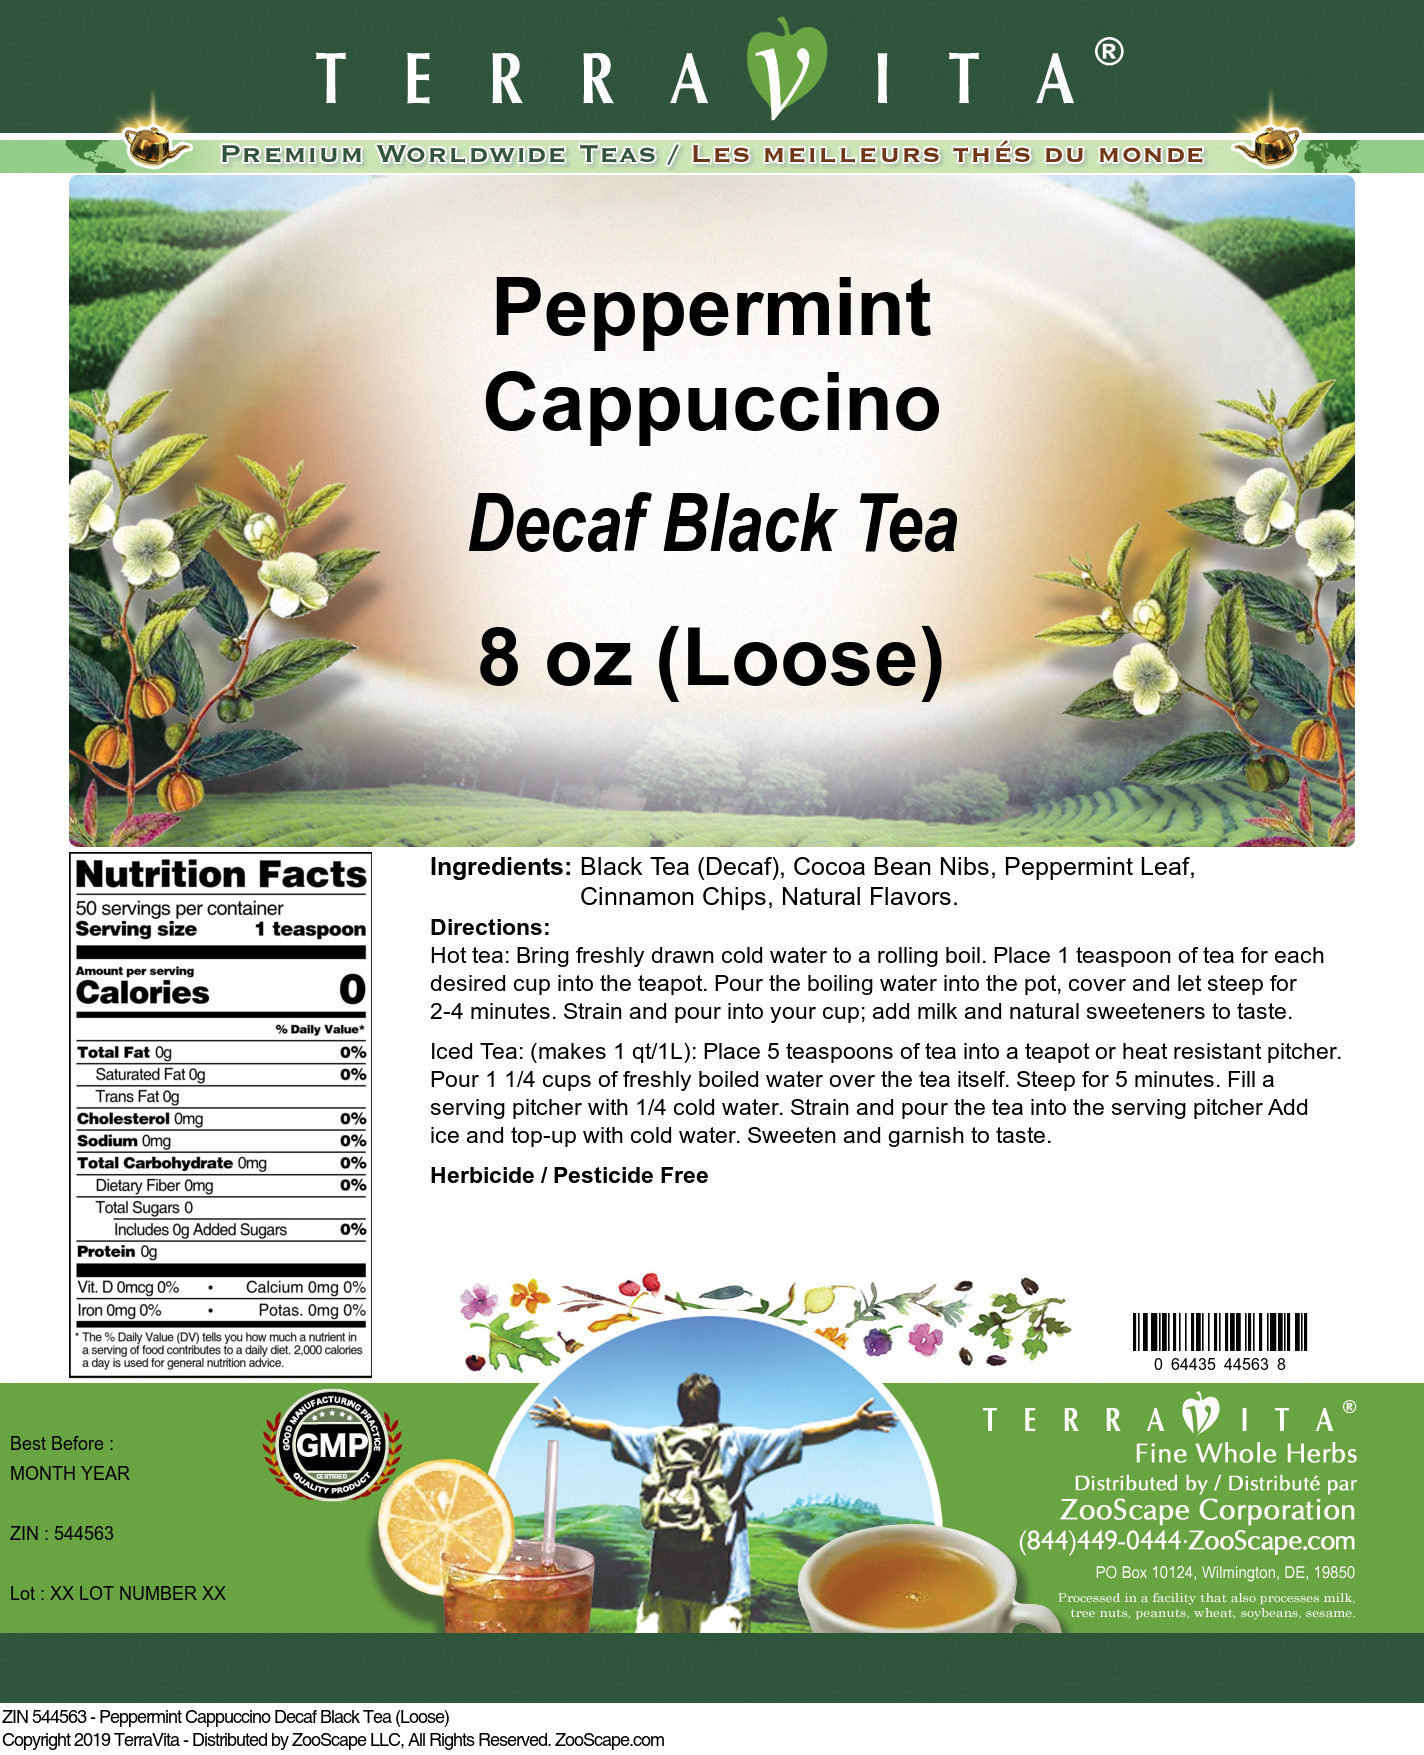 Peppermint Cappuccino Decaf Black Tea (Loose) - Label